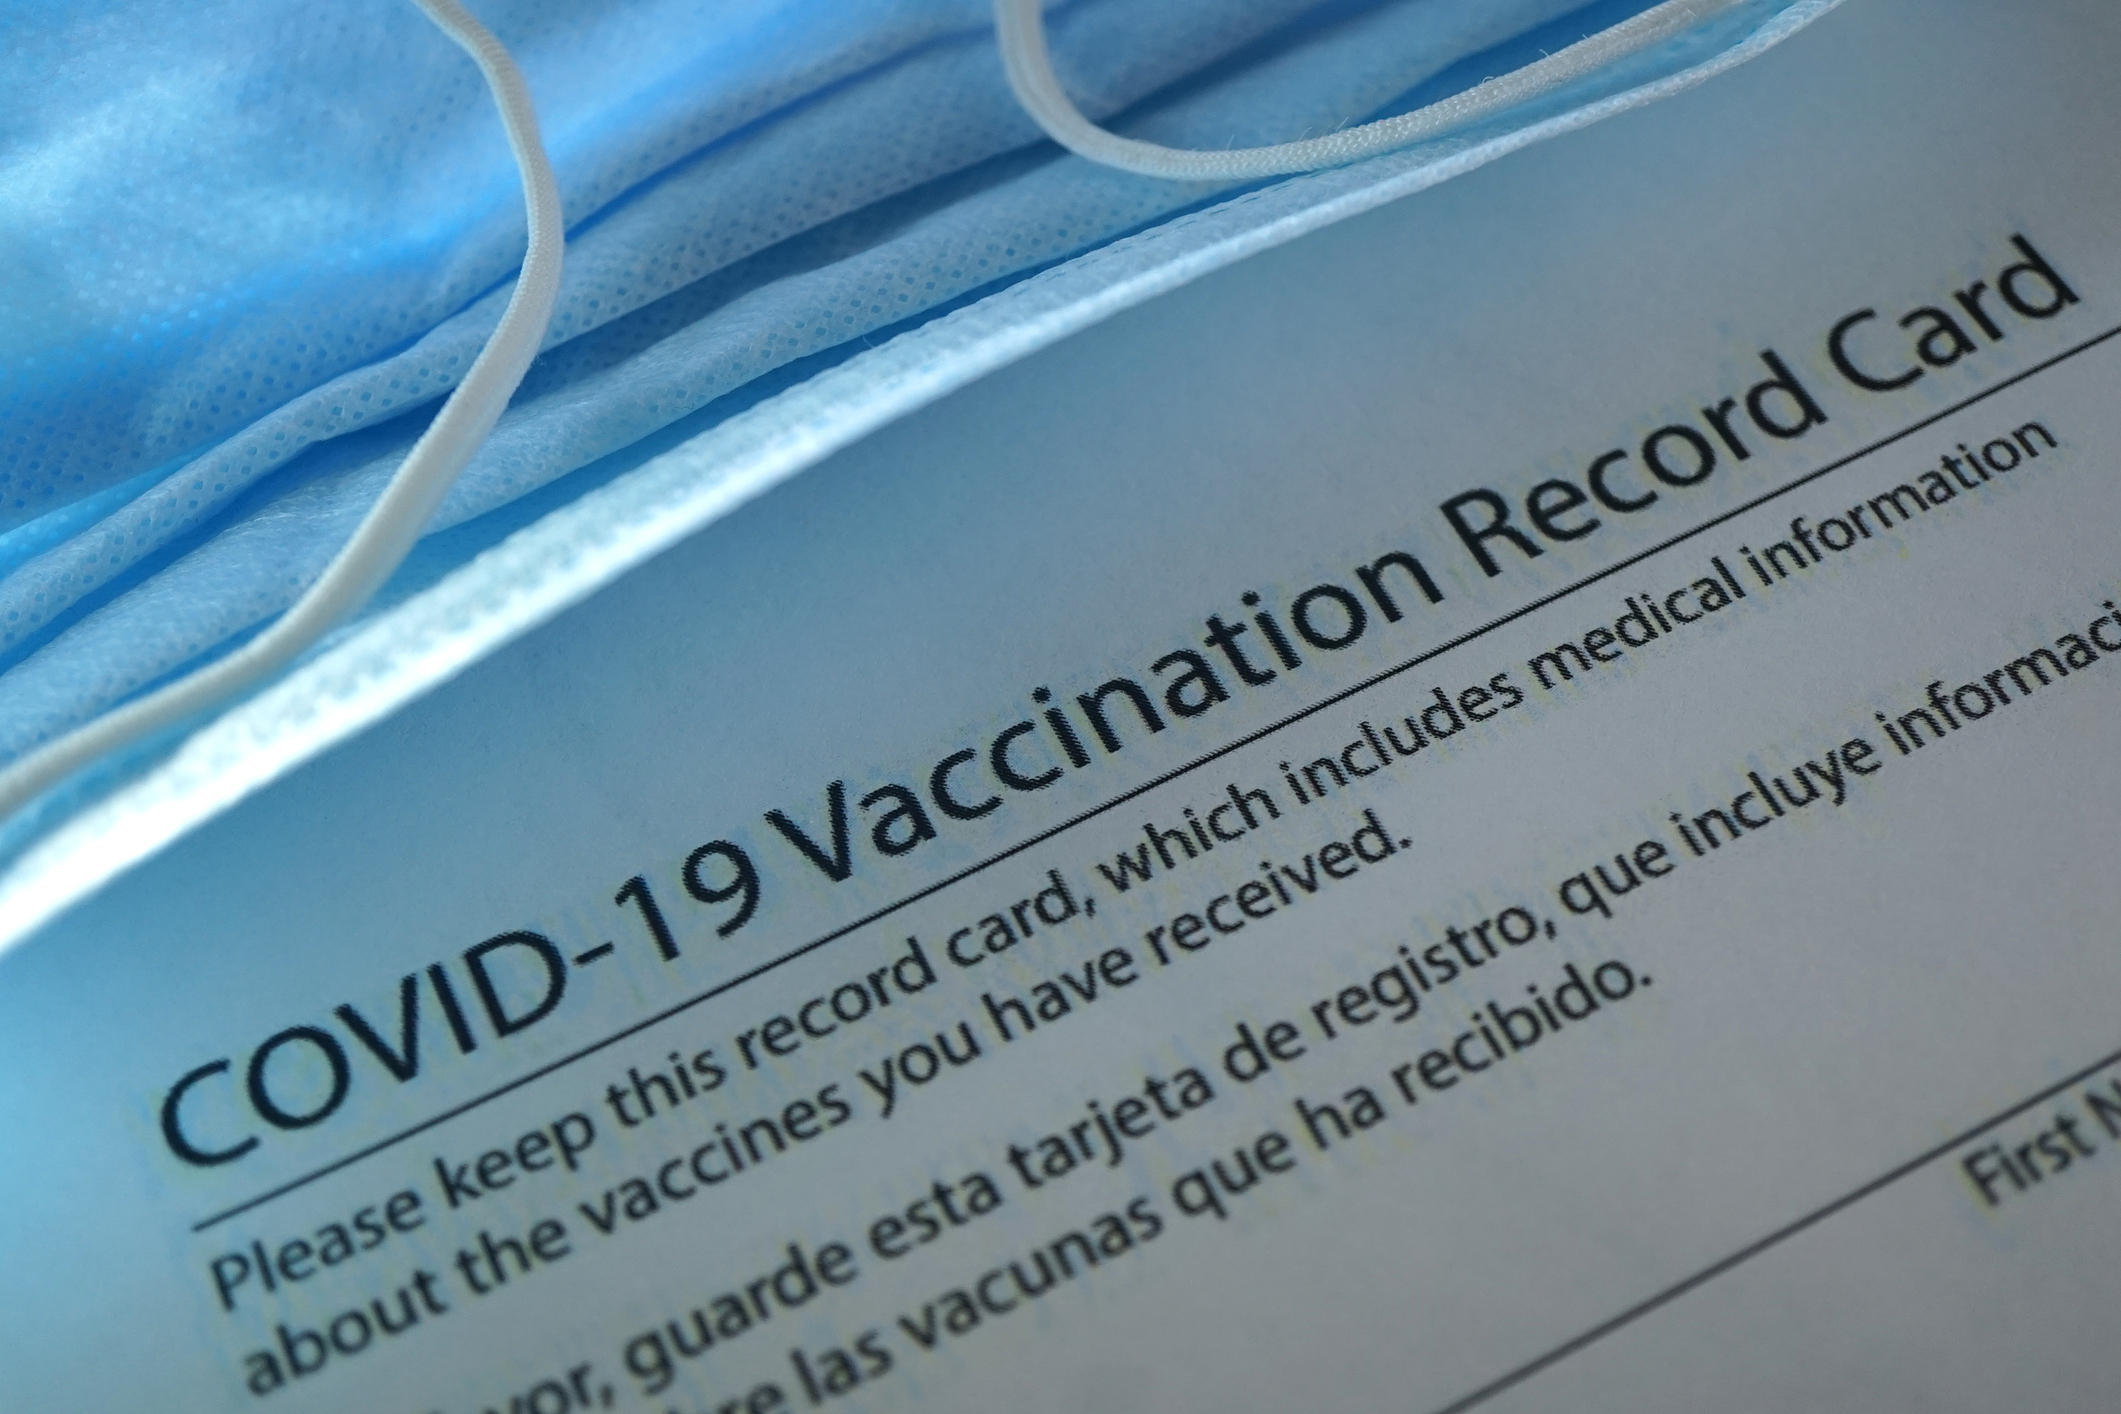 Covid vaccine plan